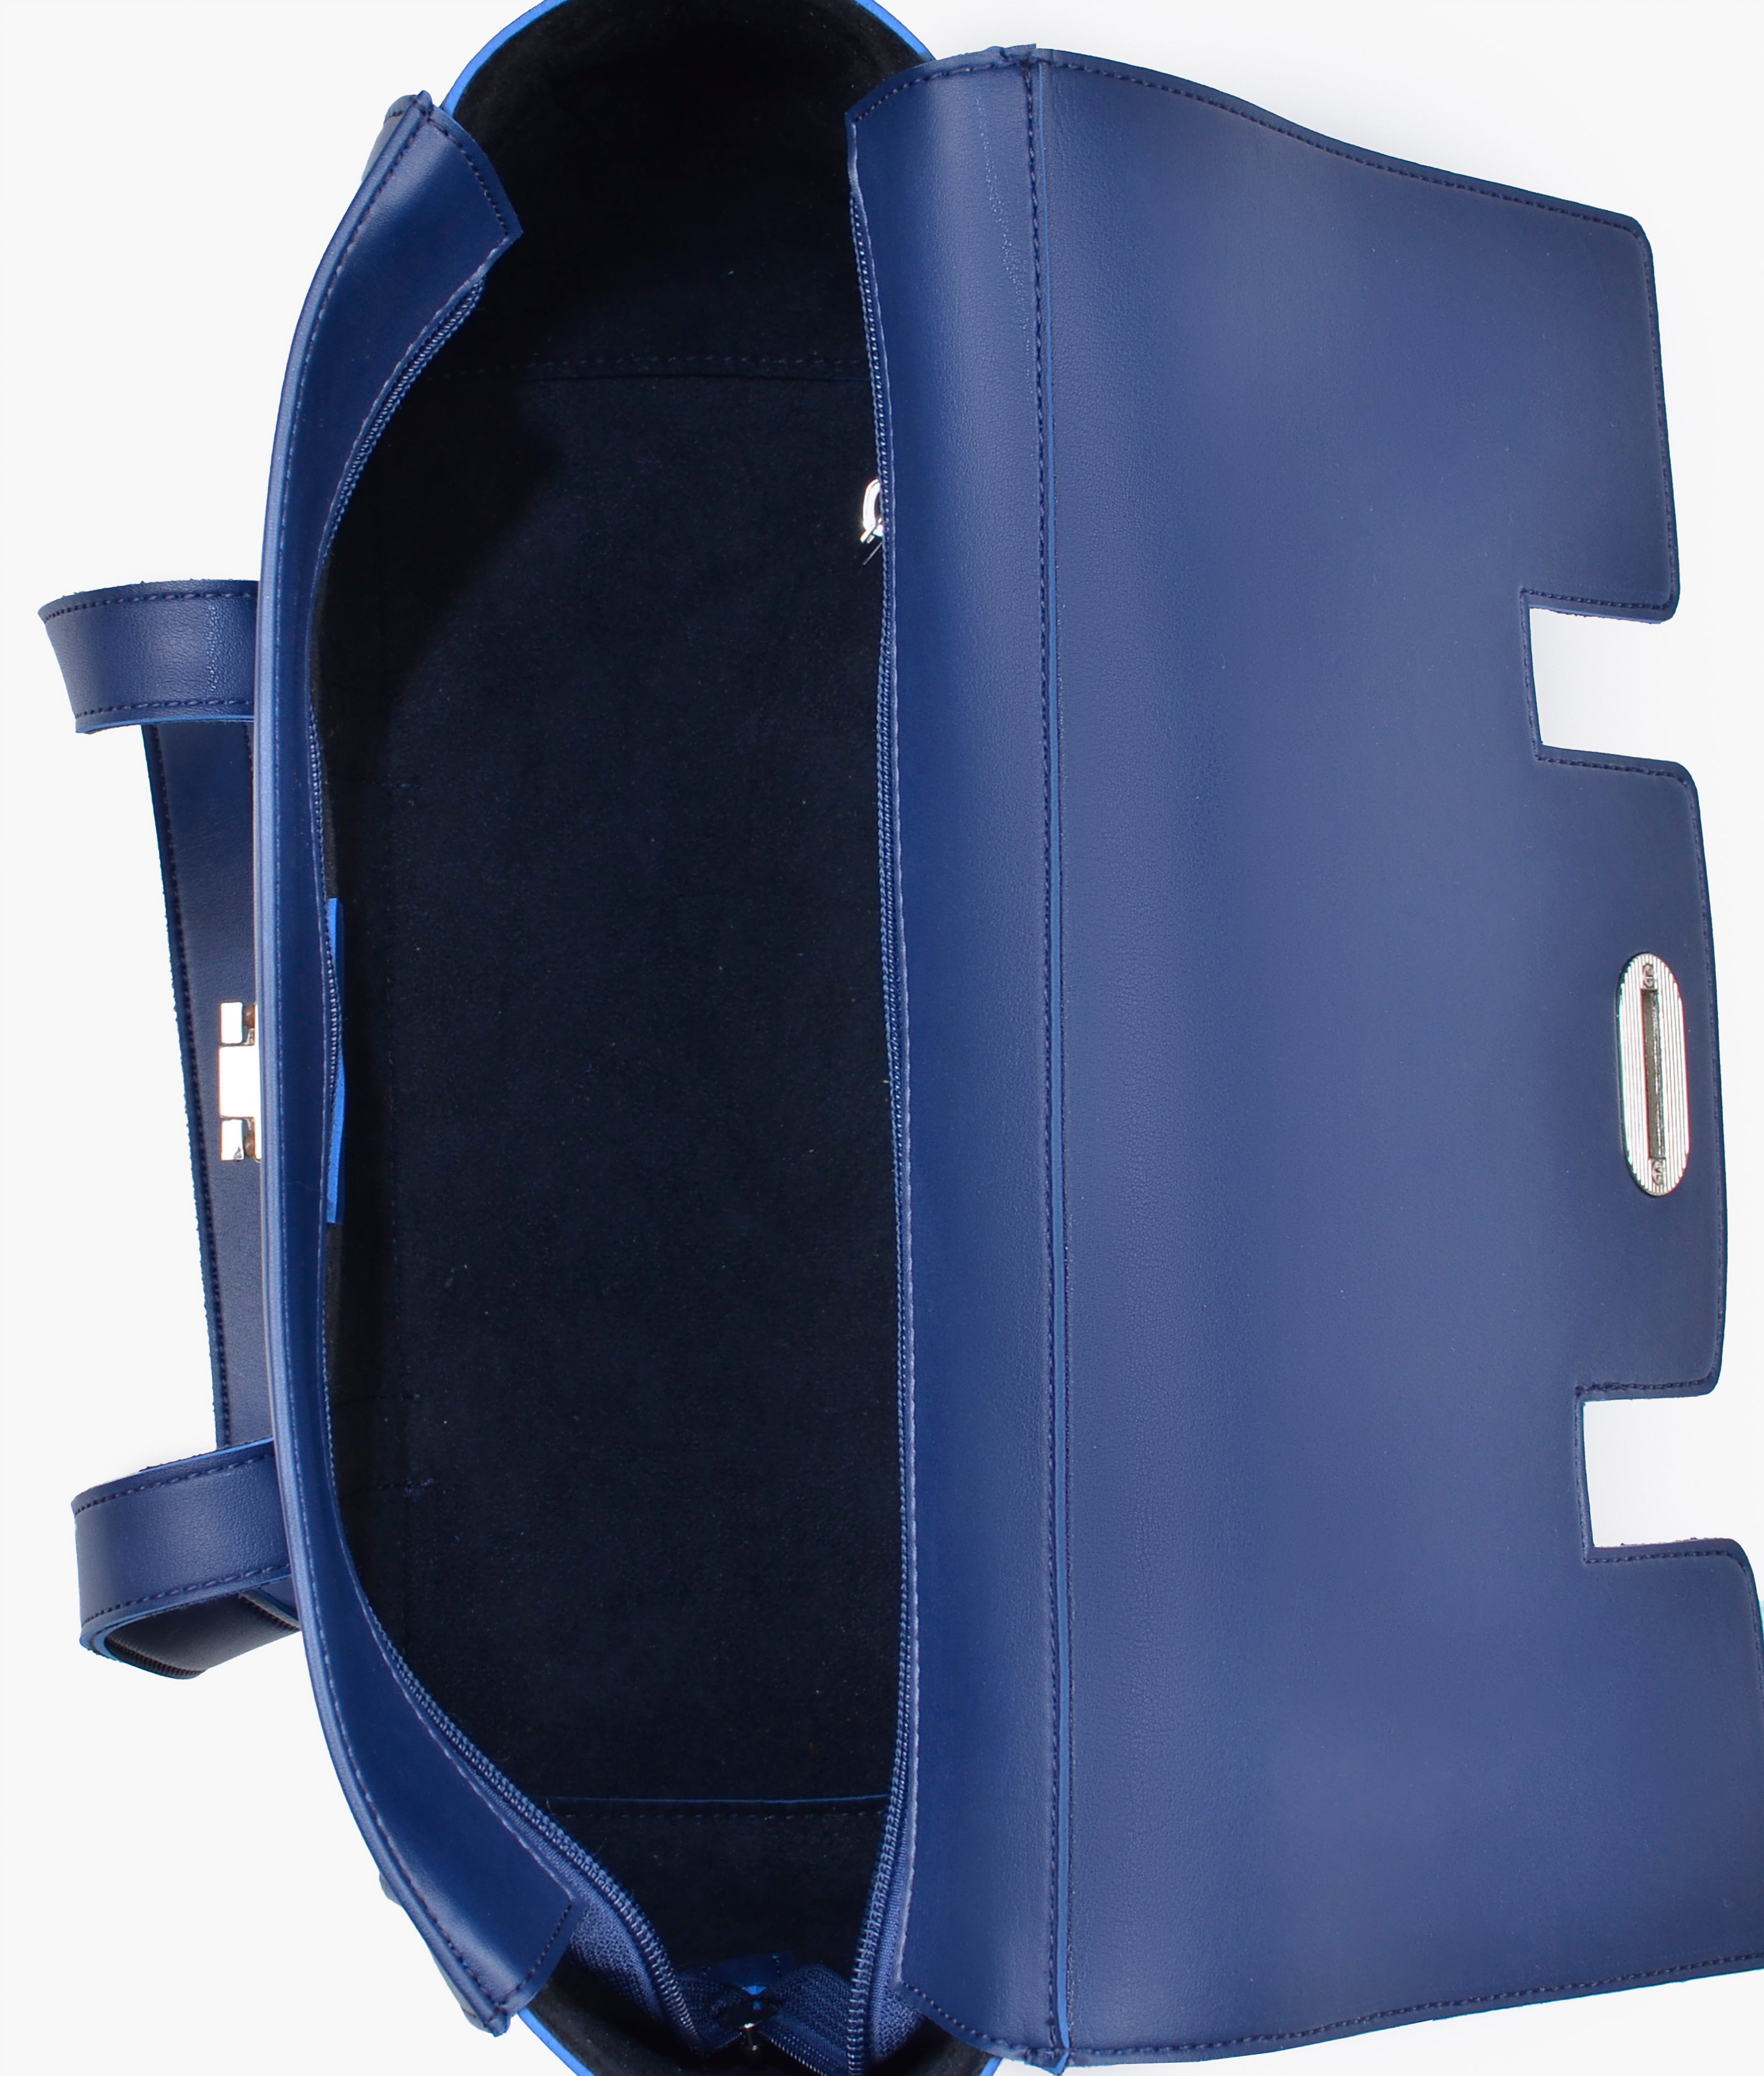 Blue carry-all satchel bag